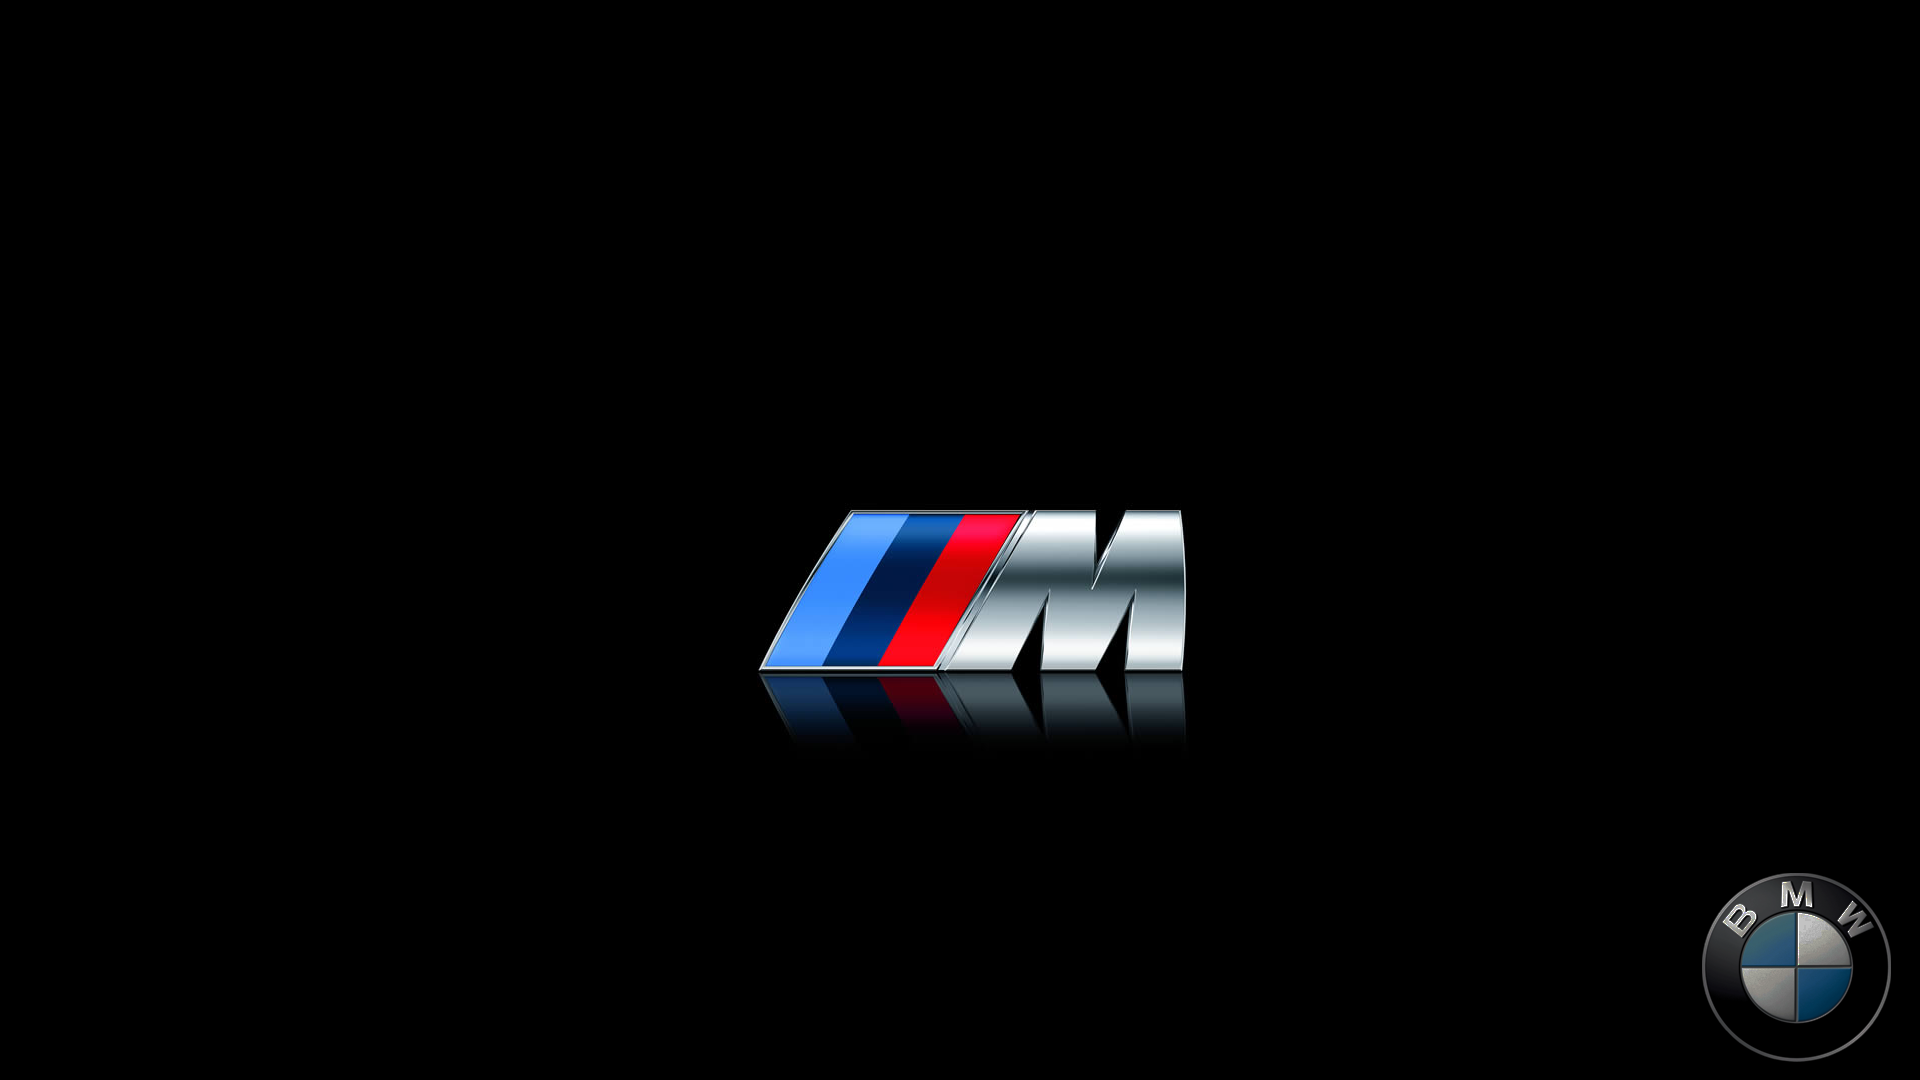 48+] BMW M HD Wallpaper - WallpaperSafari